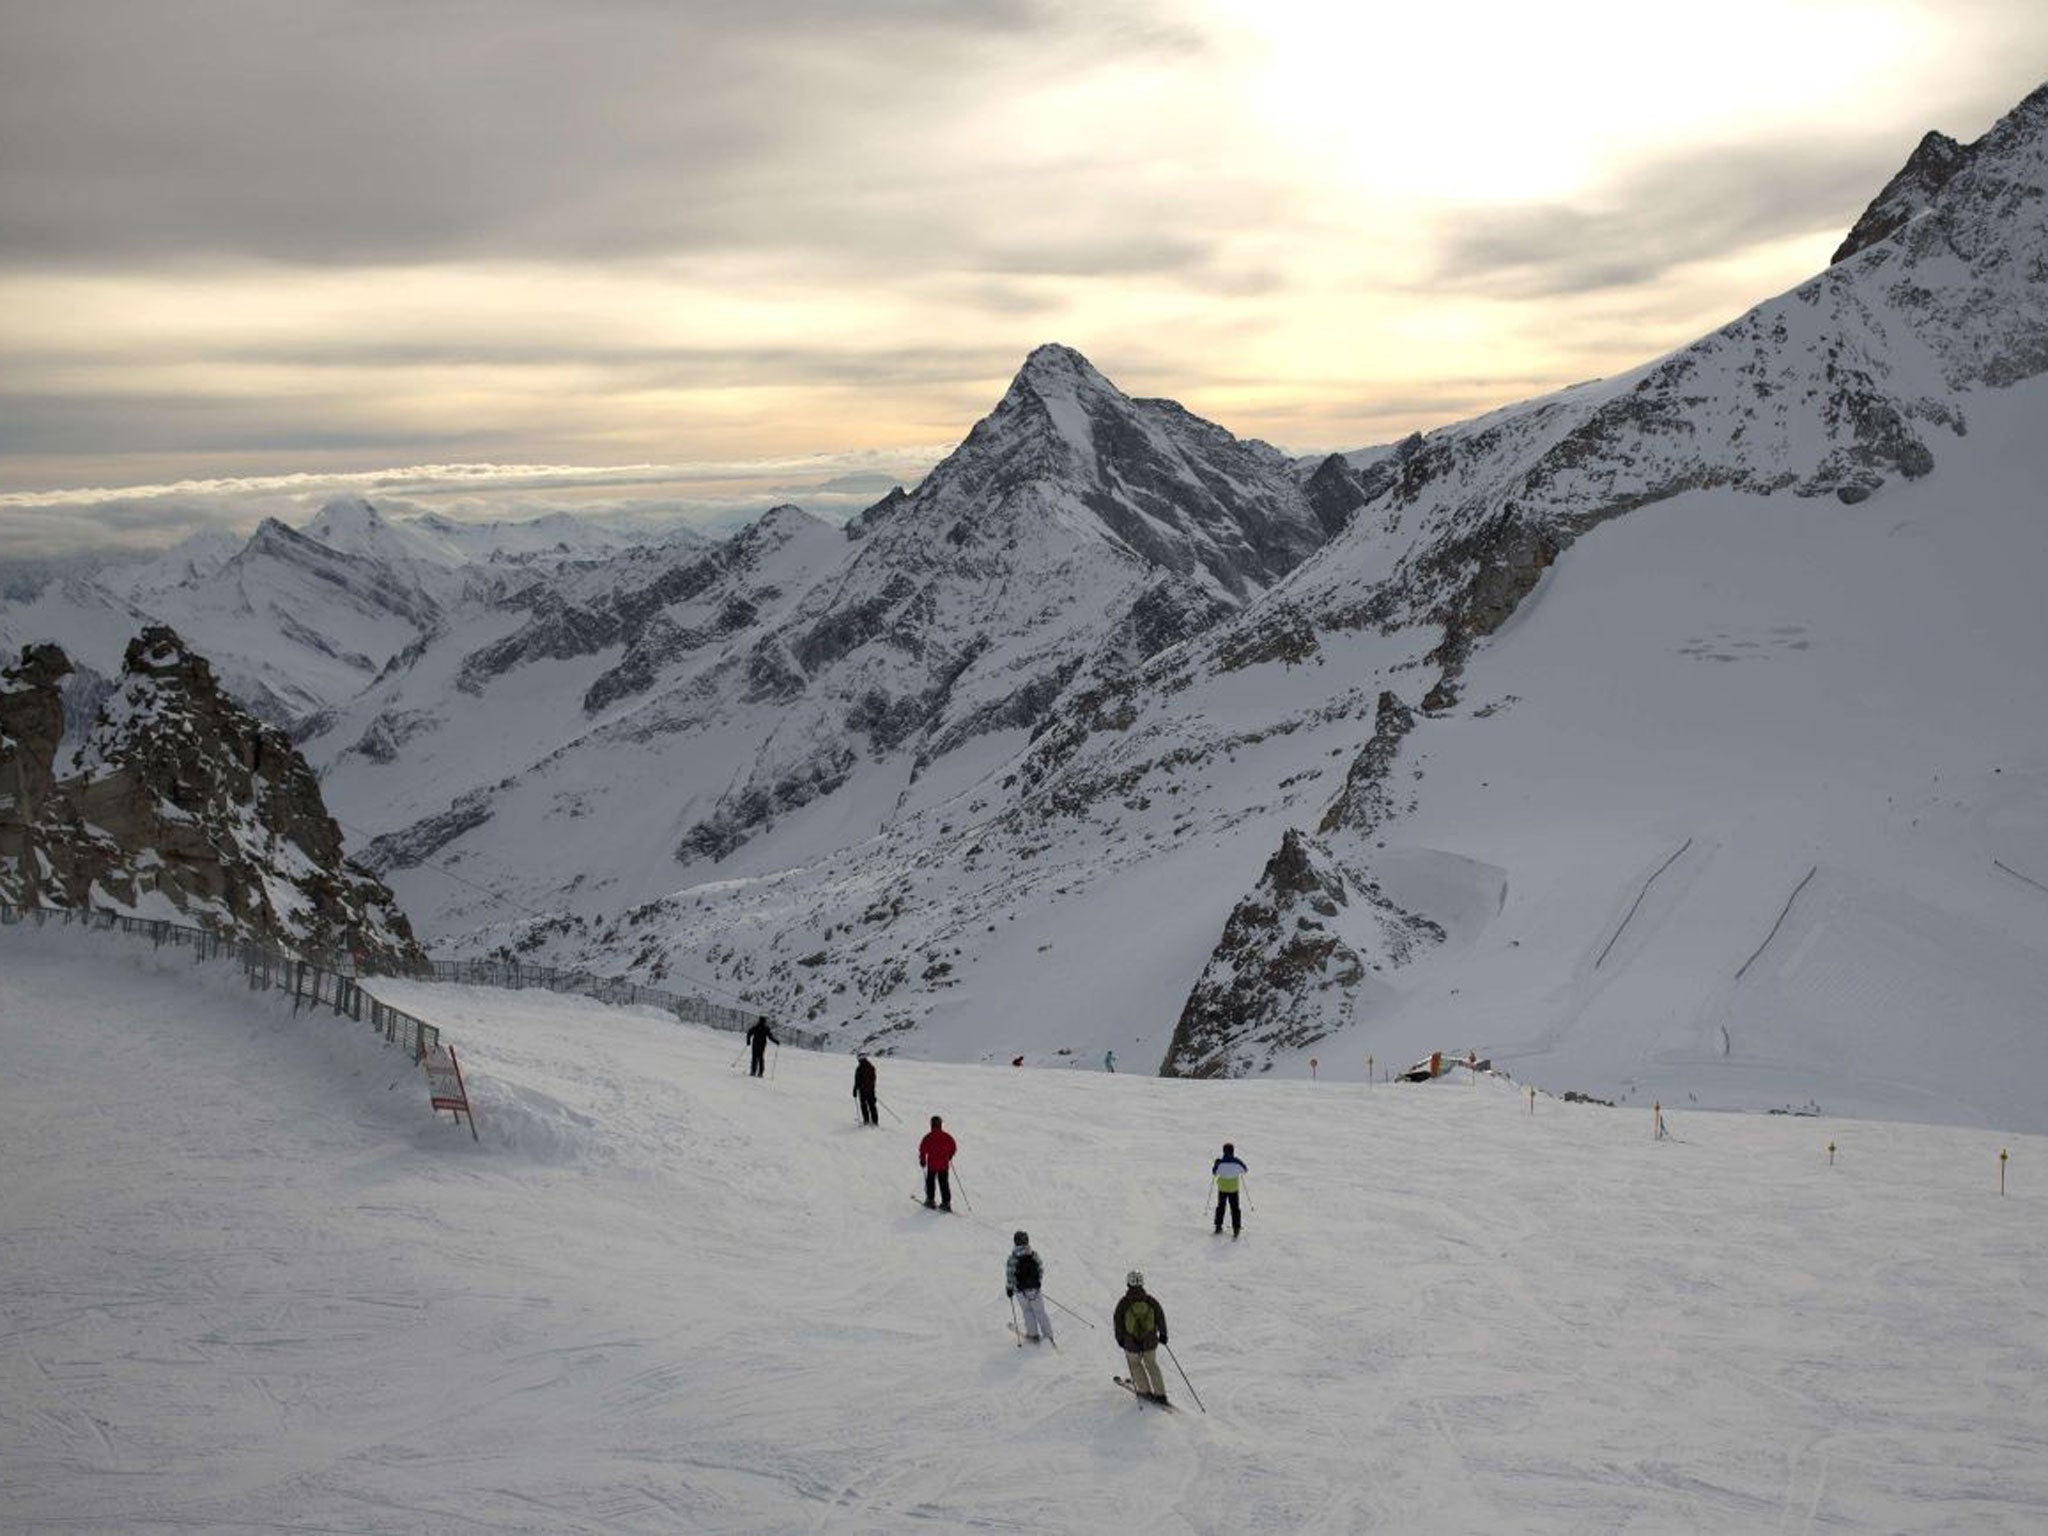 Glacier mint condition: Hintertux had 20cm of snow on Tuesday